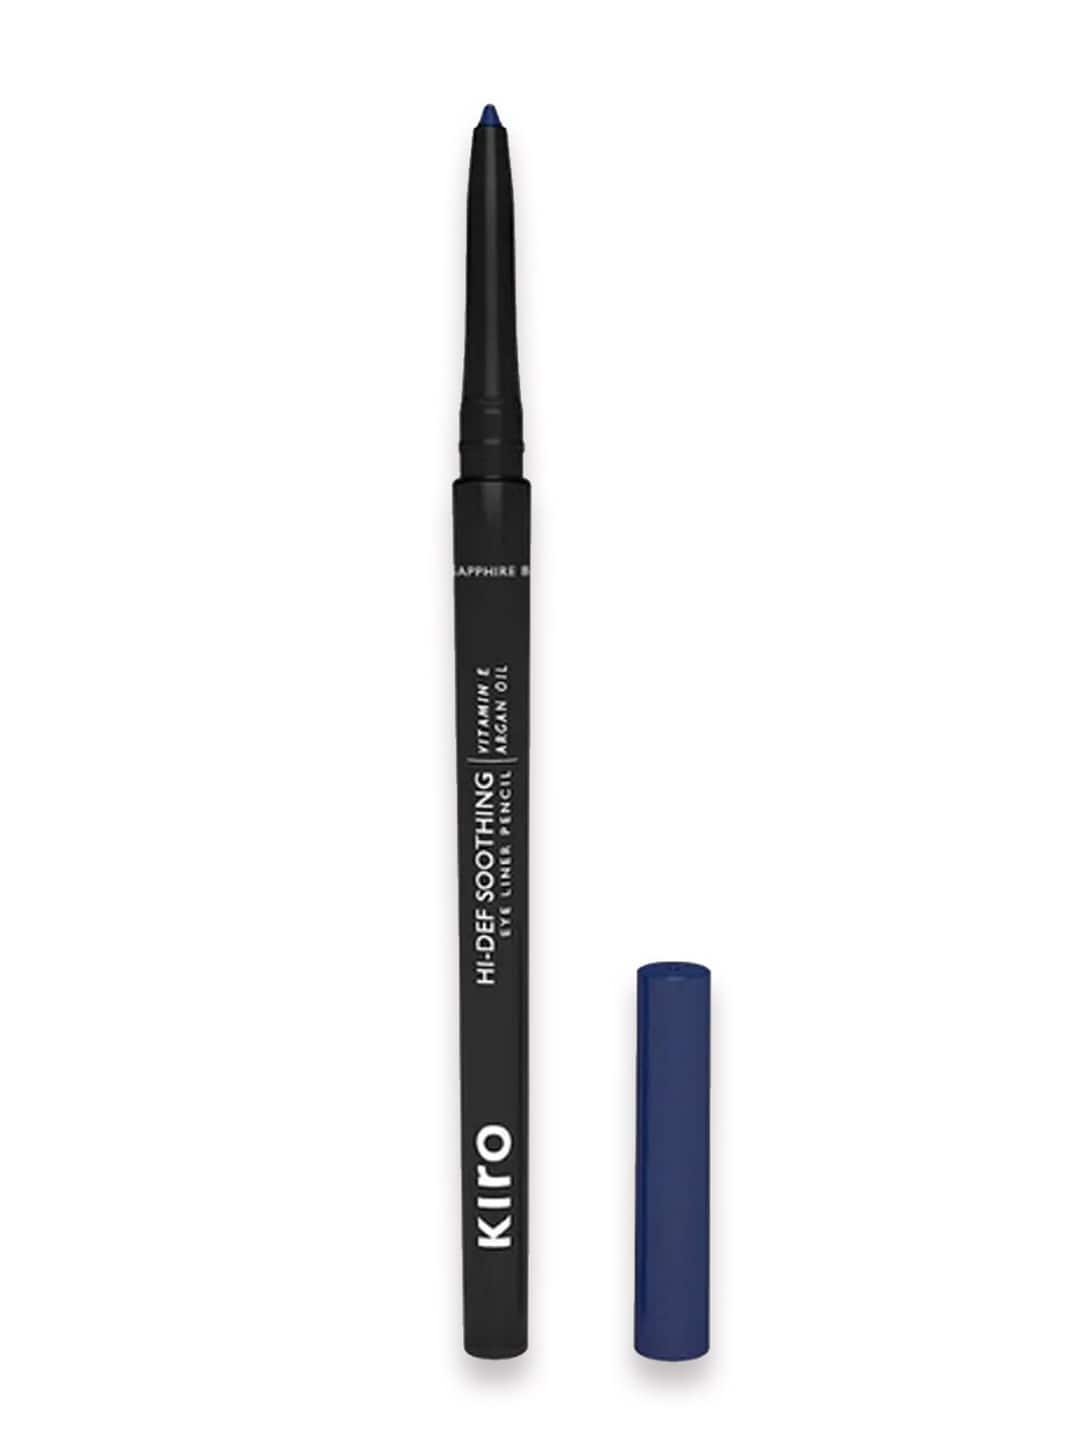 KIRO Hi-Def Soothing Eyeliner Pencil with Vitamin E & Argan Oil - Sapphire Blue